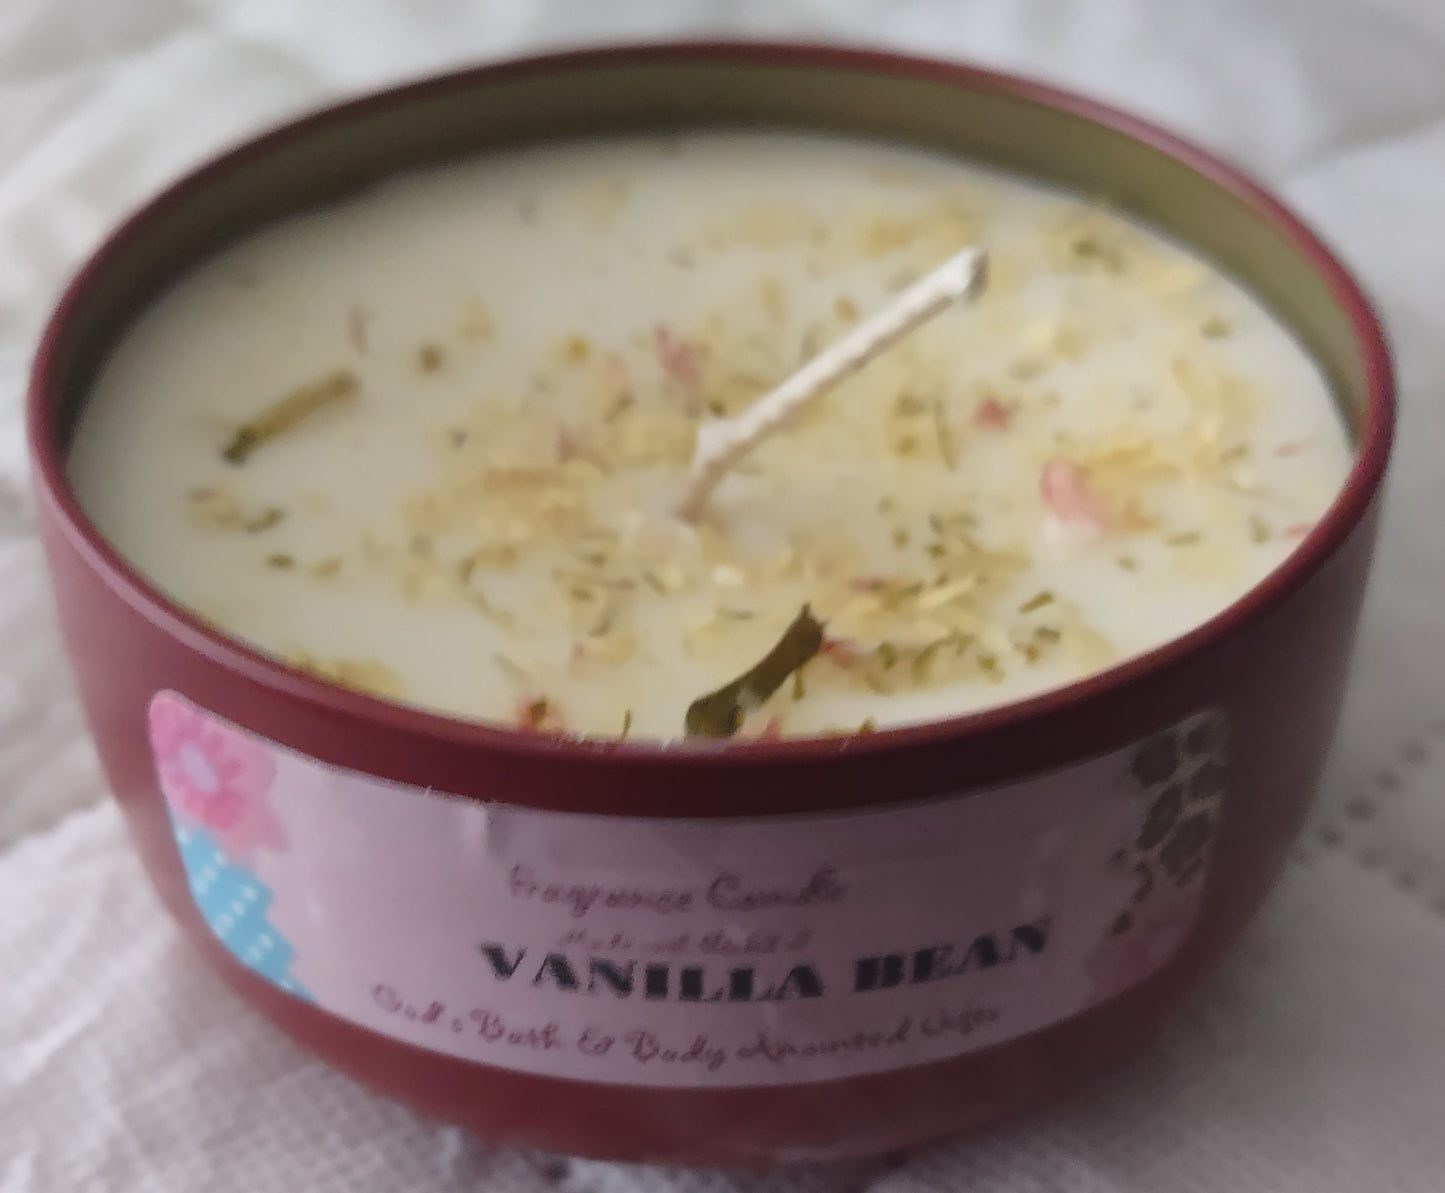 Vanilla Bean - 8oz metallic tin can with lid